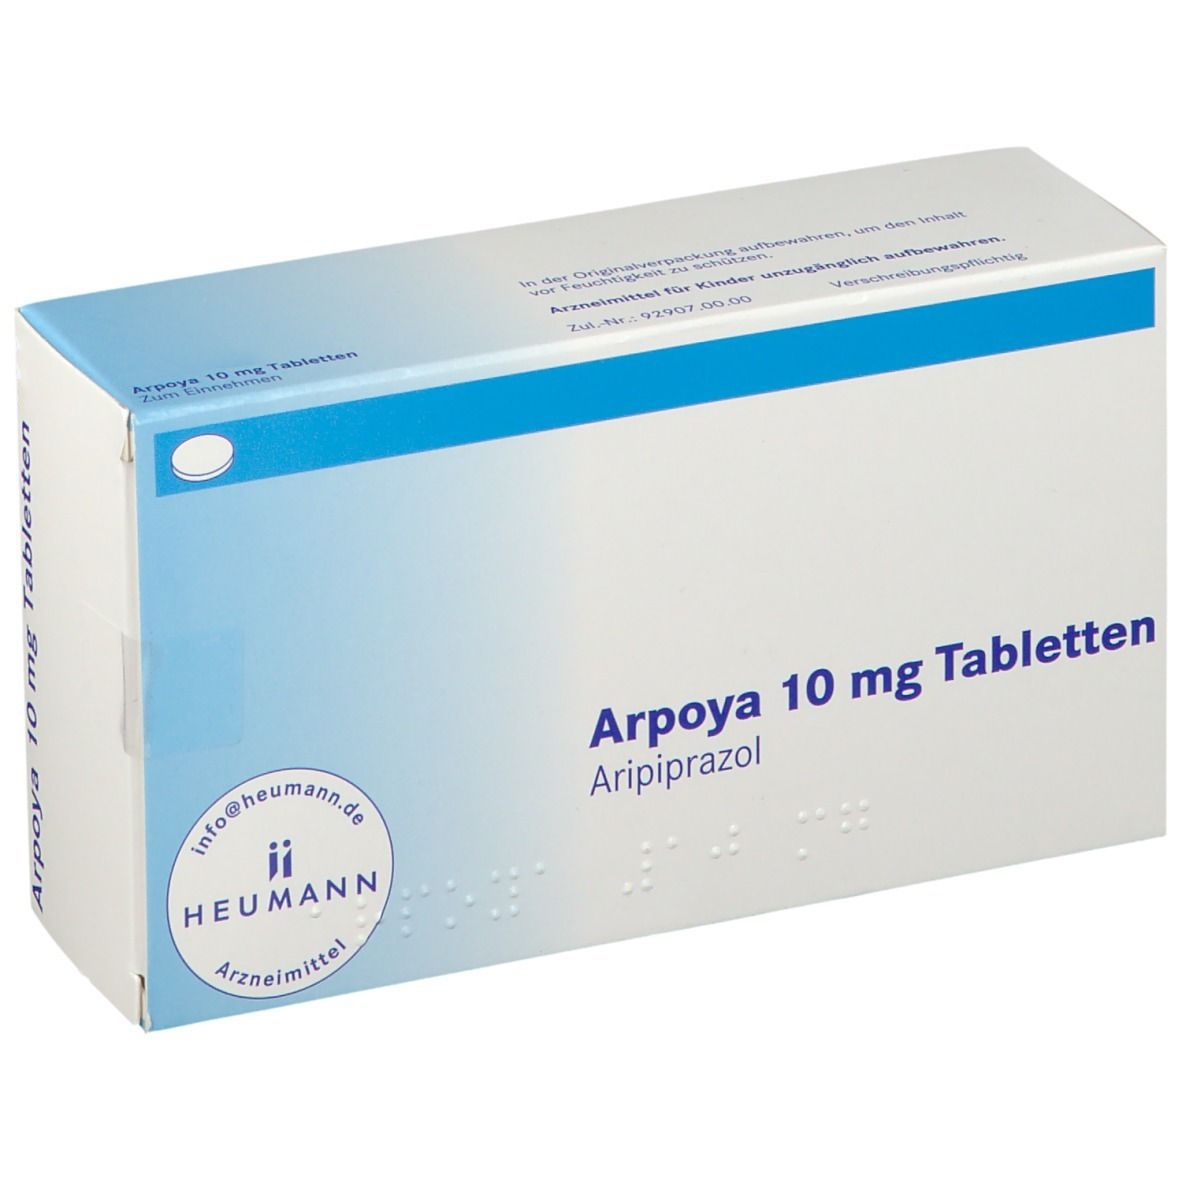 Arpoya 10 mg